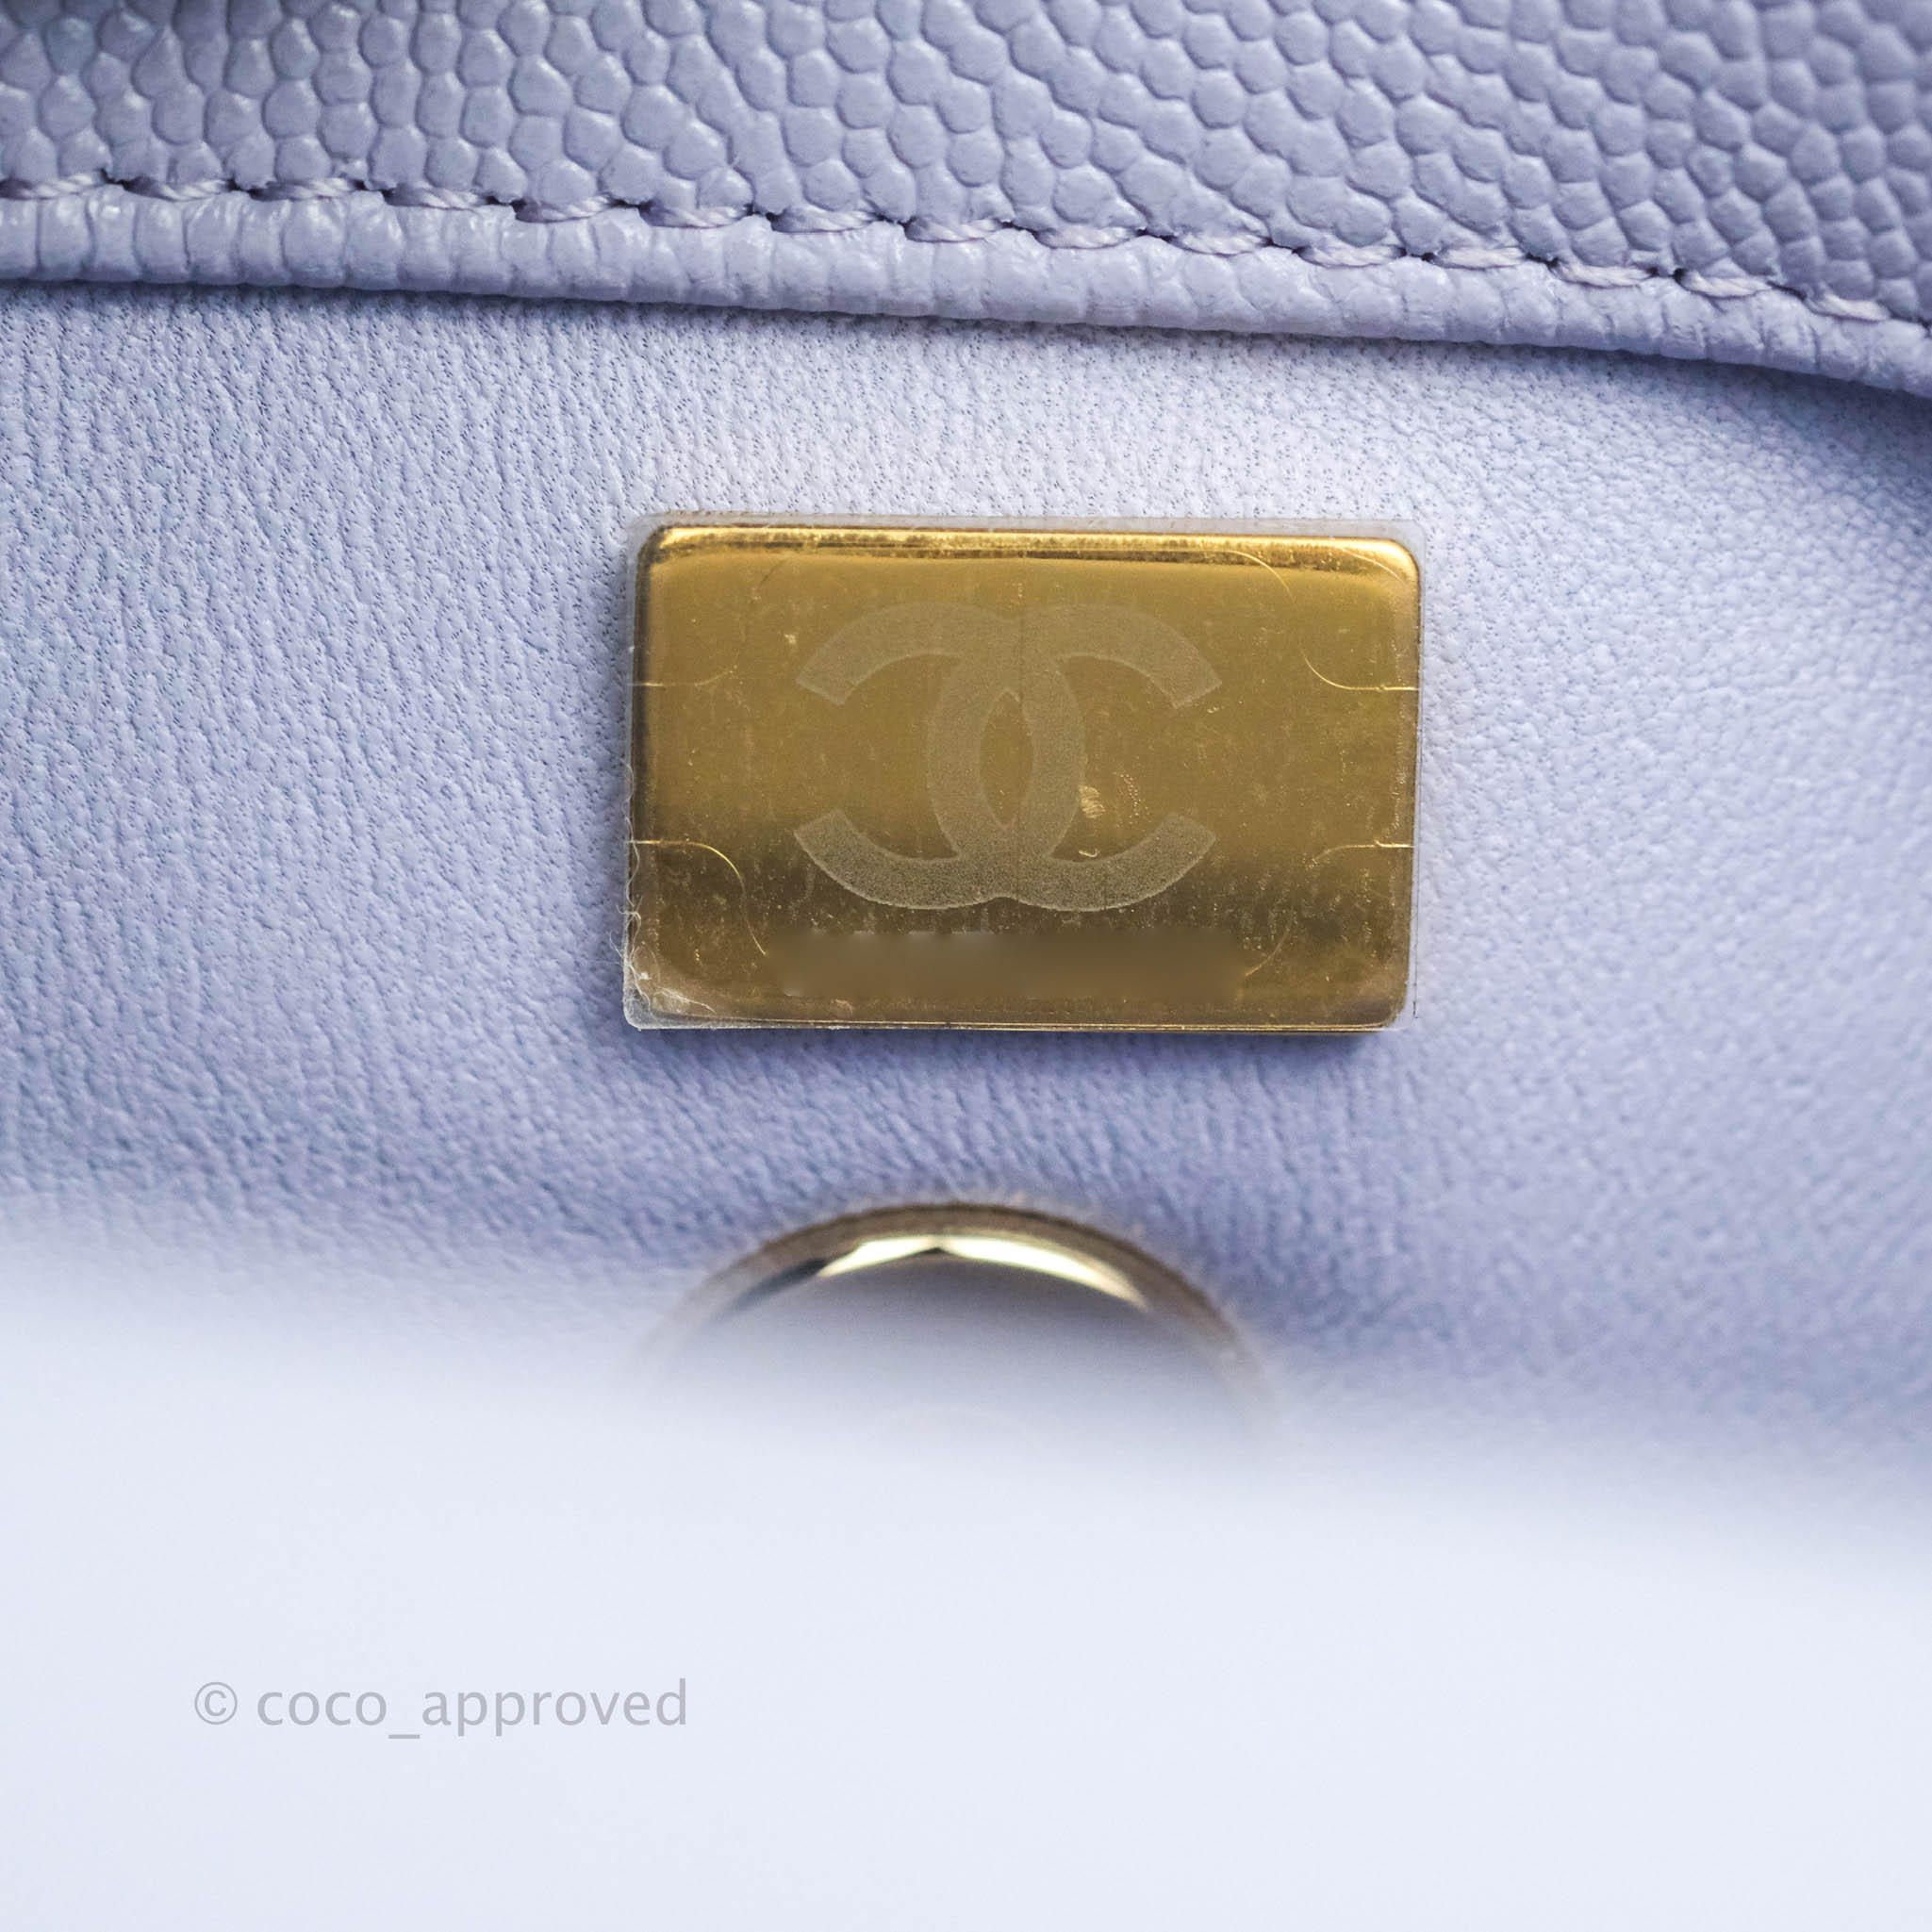 NIB 21K Chanel Lavender Caviar Coco Handle Flap Bag Small Purple